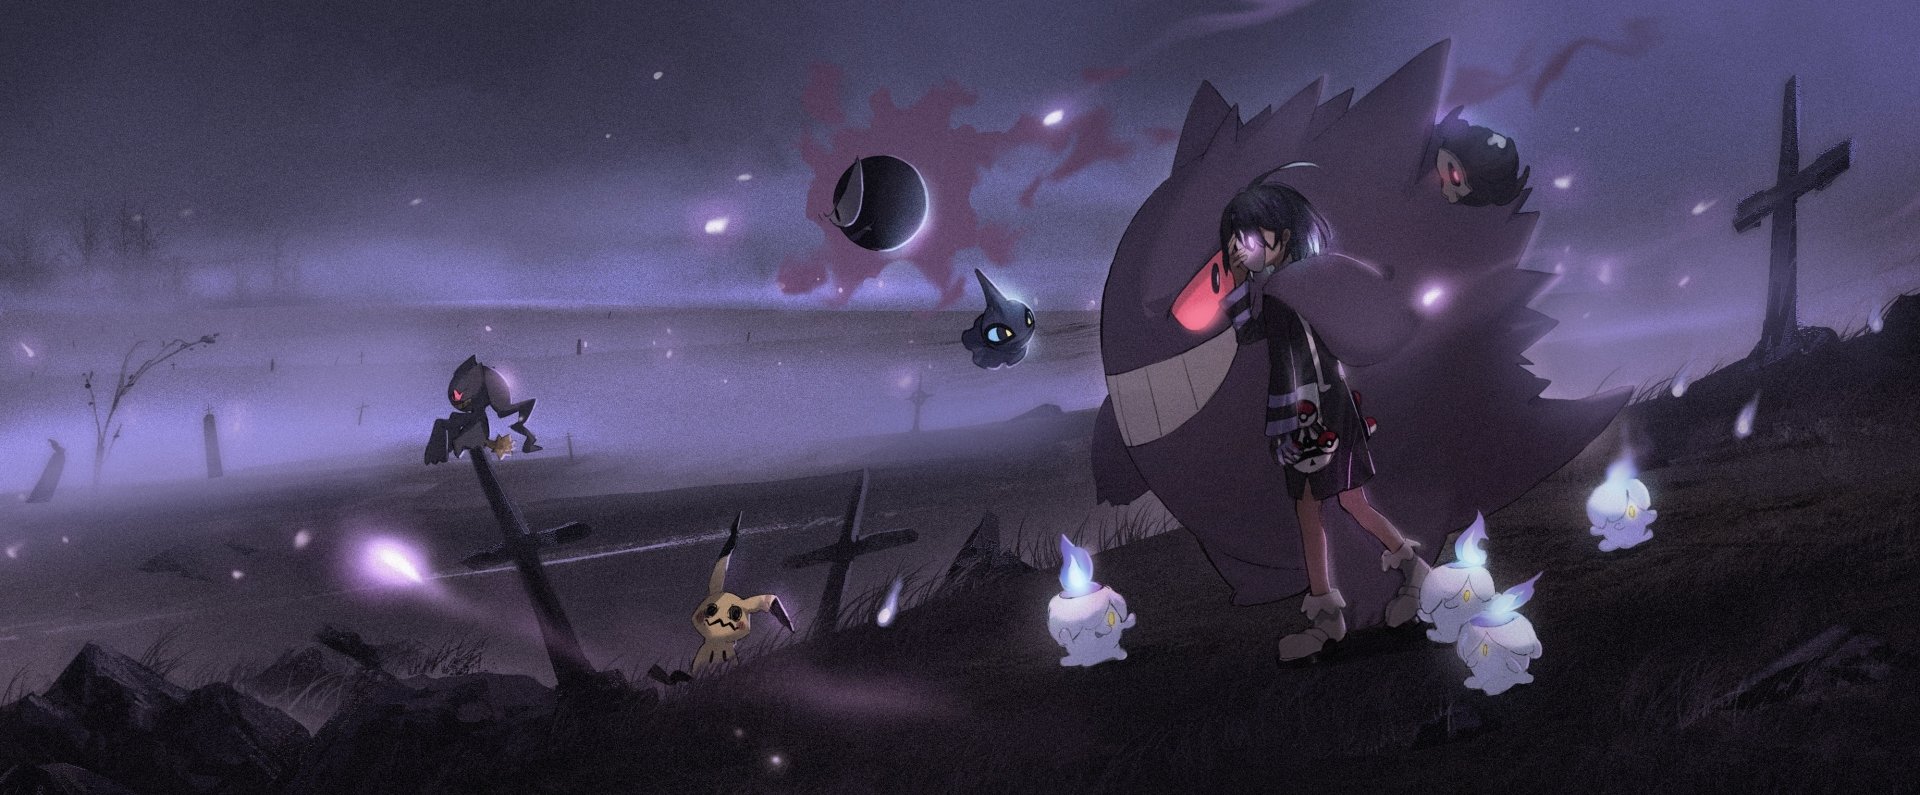 Allister (Pokémon) HD Wallpaper and Background Image